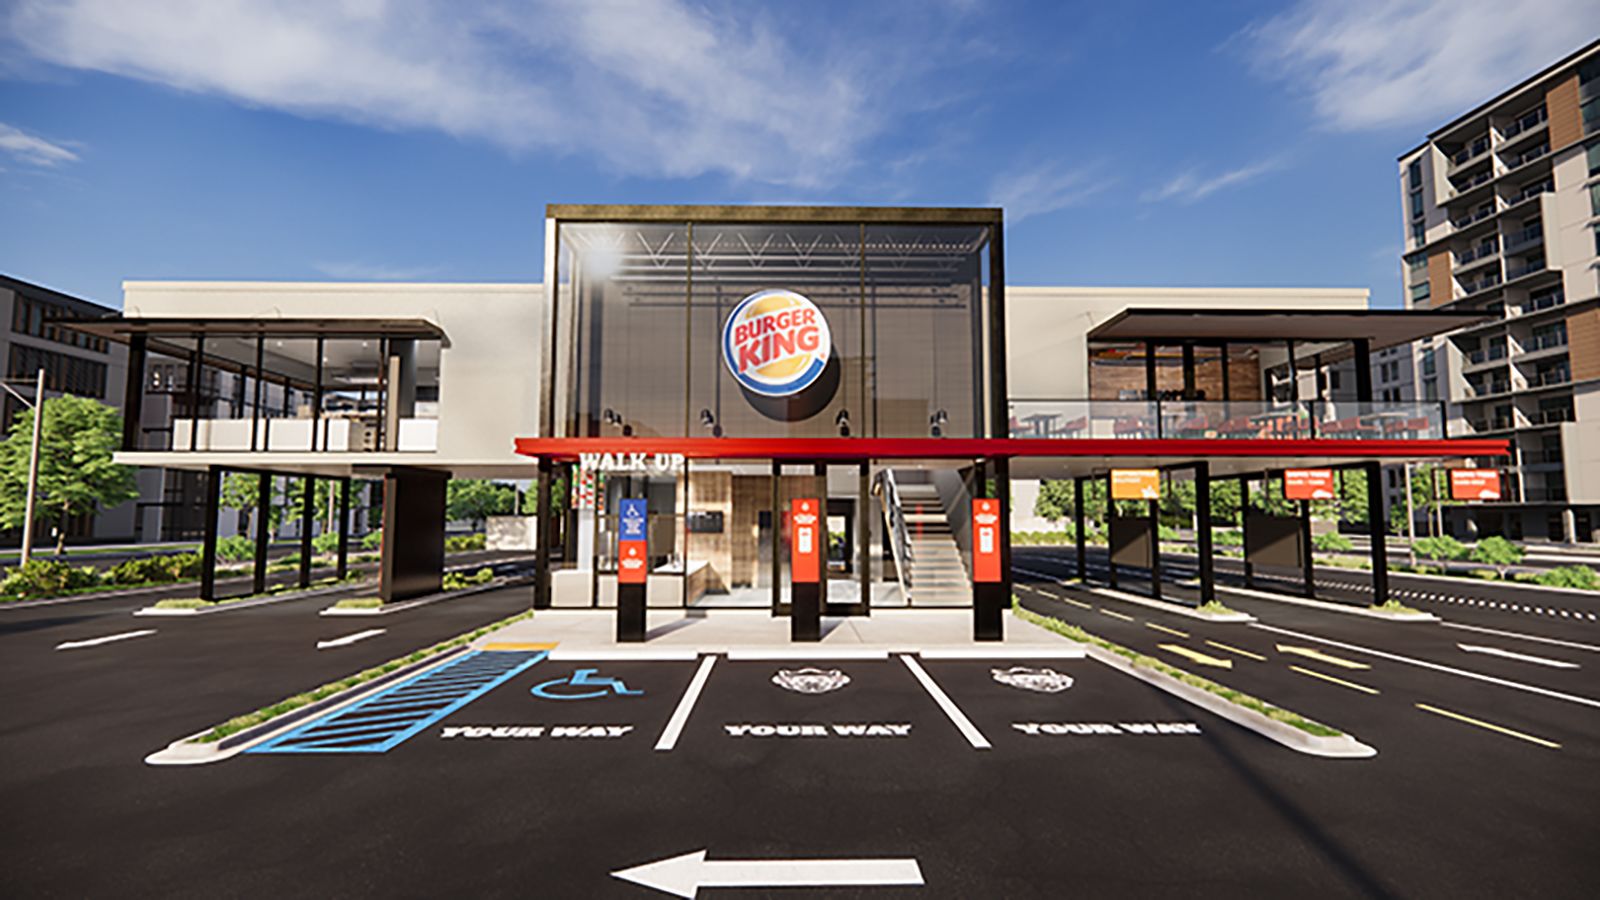 https://media.cnn.com/api/v1/images/stellar/prod/200902125558-02-burger-king-new-restaurant-design-rendering.jpg?q=w_1600,h_900,x_0,y_0,c_fill